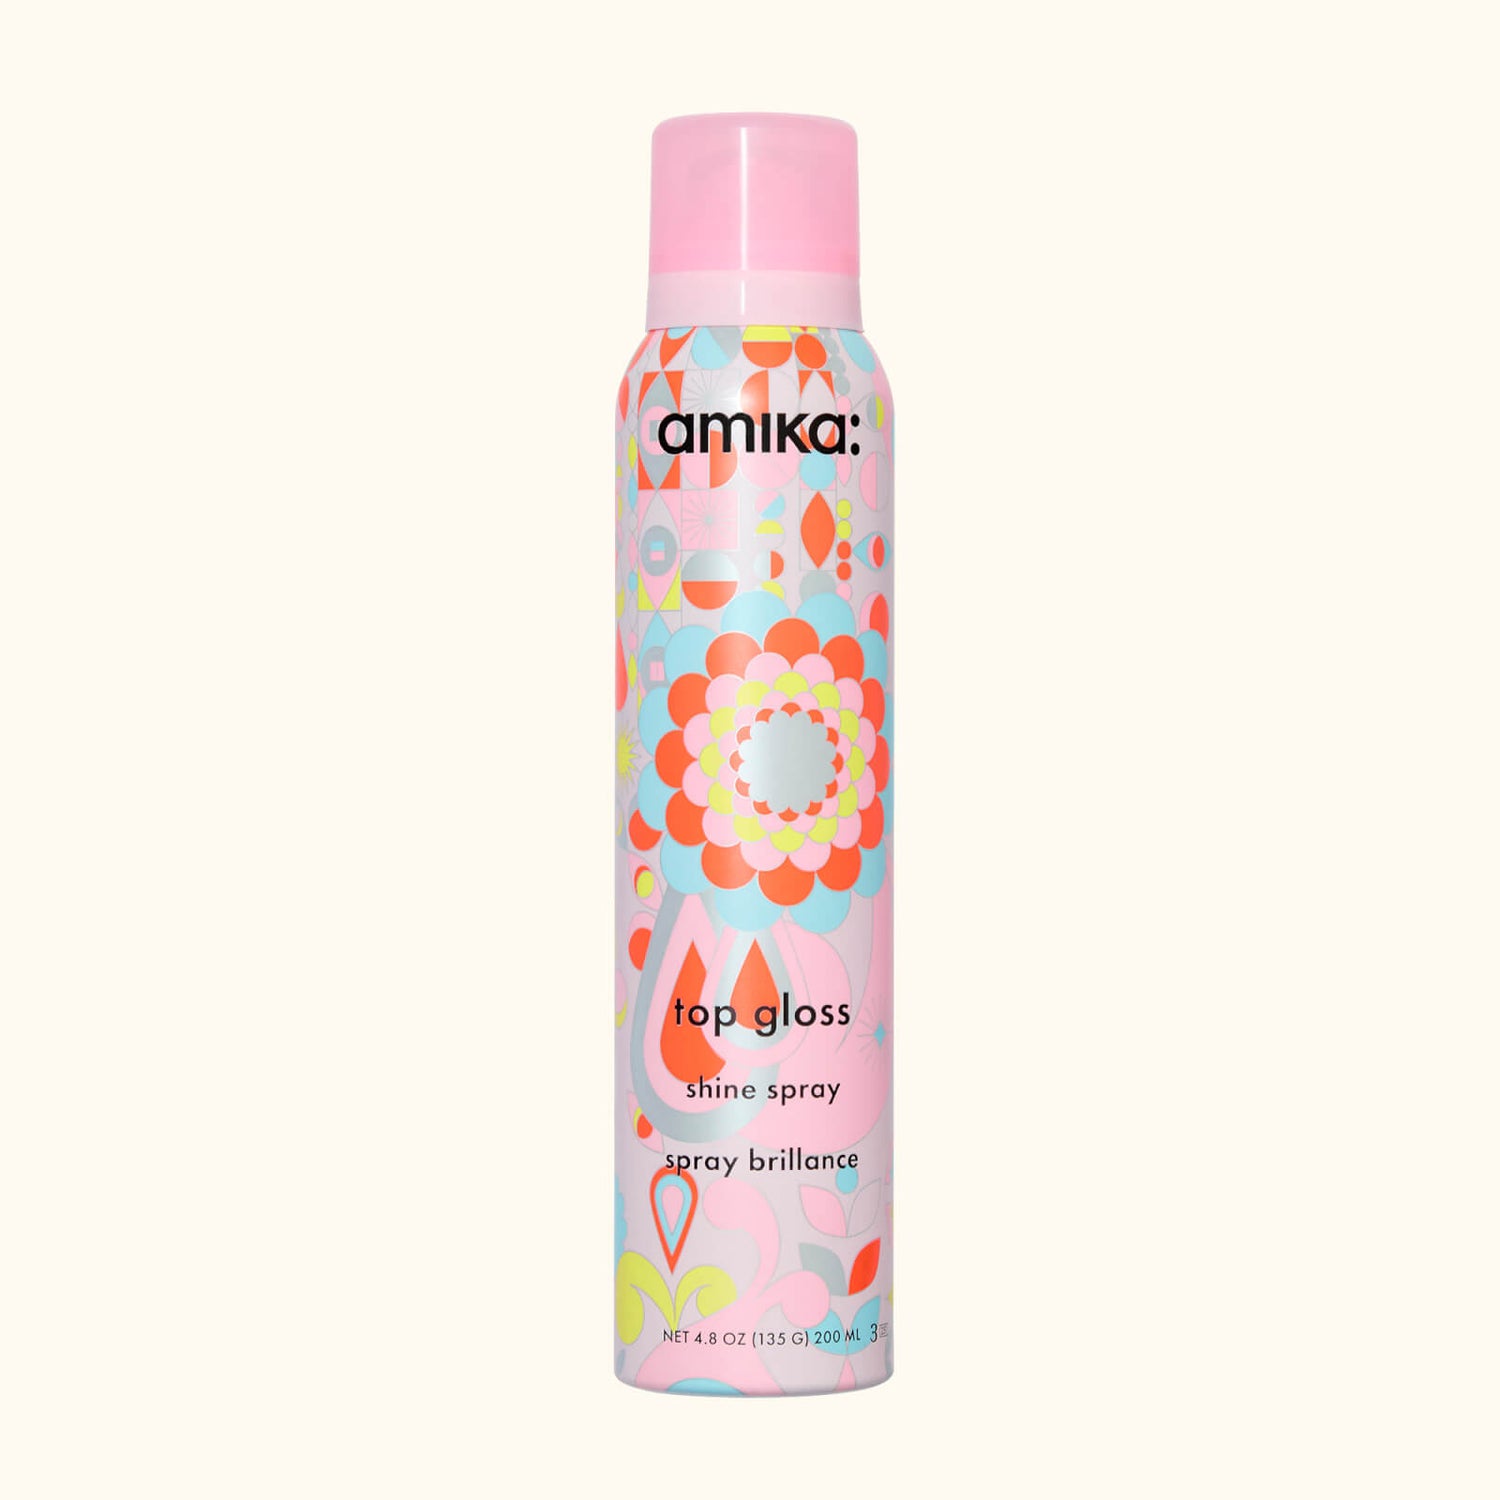 Amika Top Gloss Shine Spray 141ml